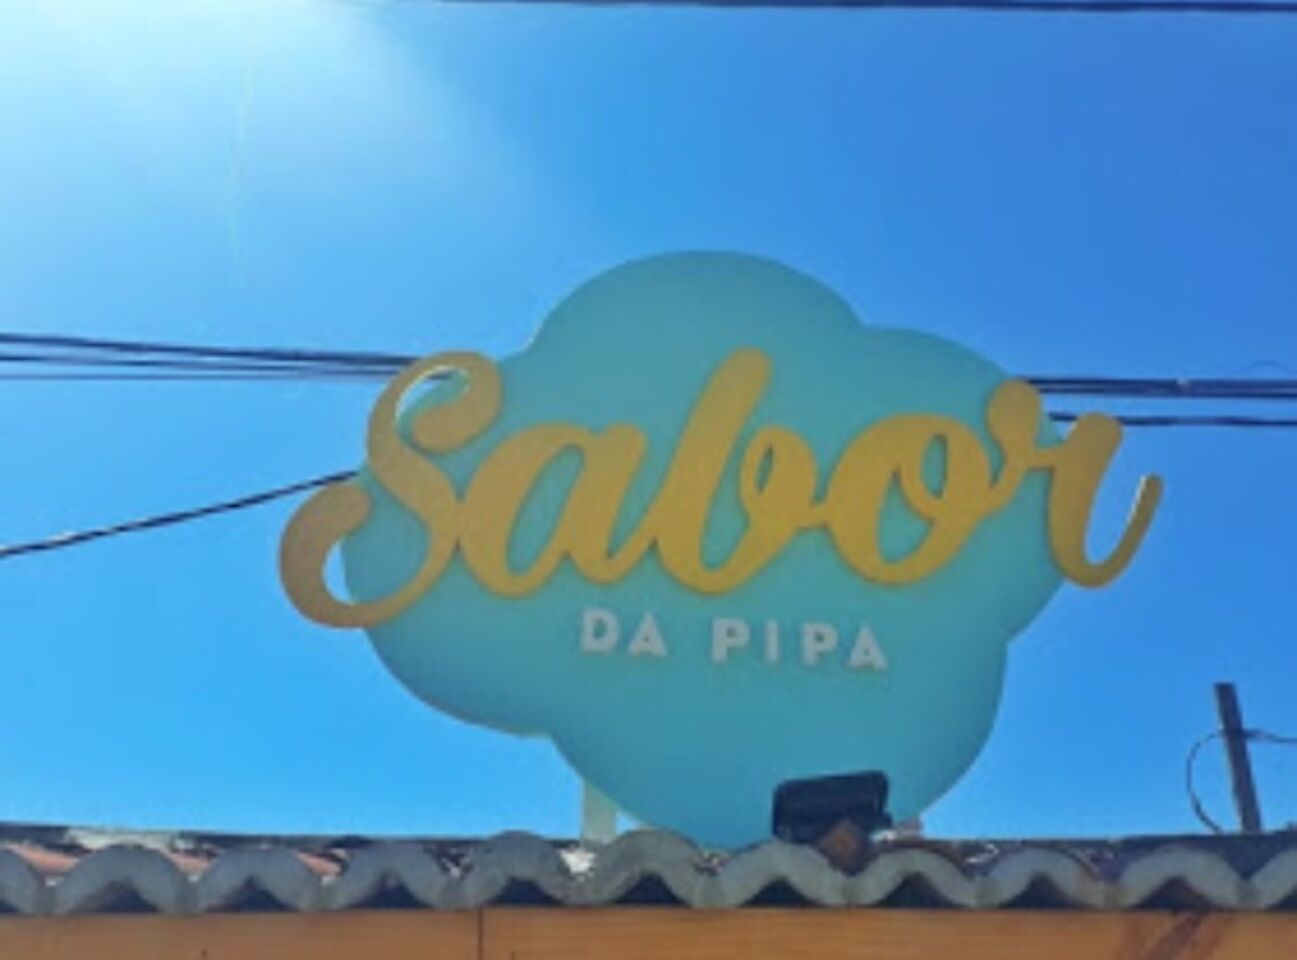 A photo of Sabor da Pipa